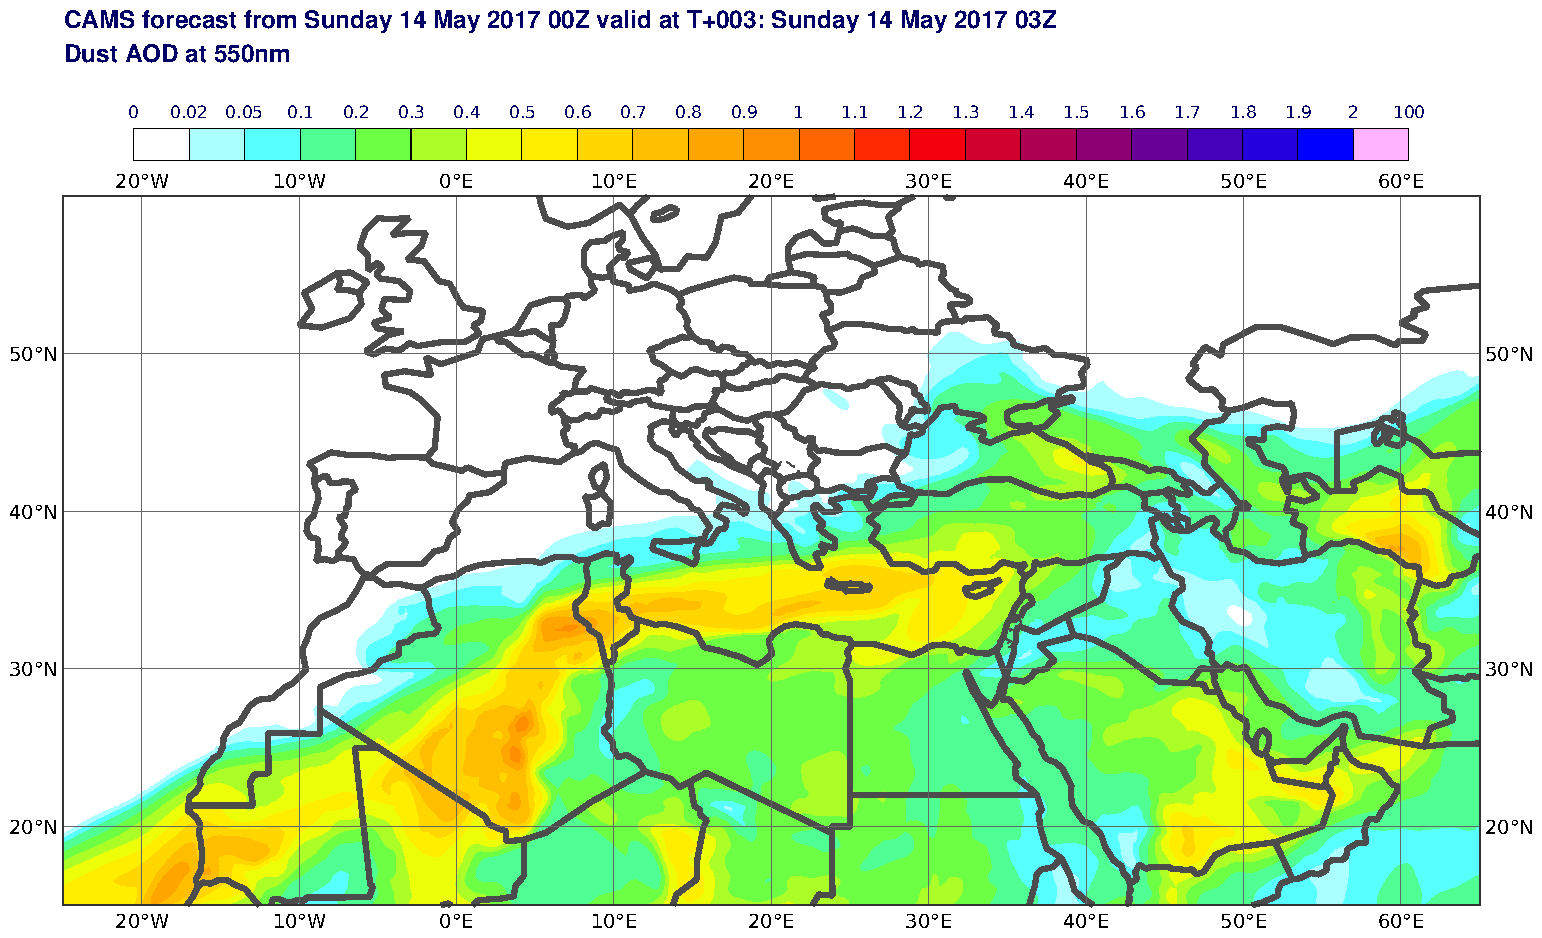 Dust AOD at 550nm valid at T3 - 2017-05-14 03:00